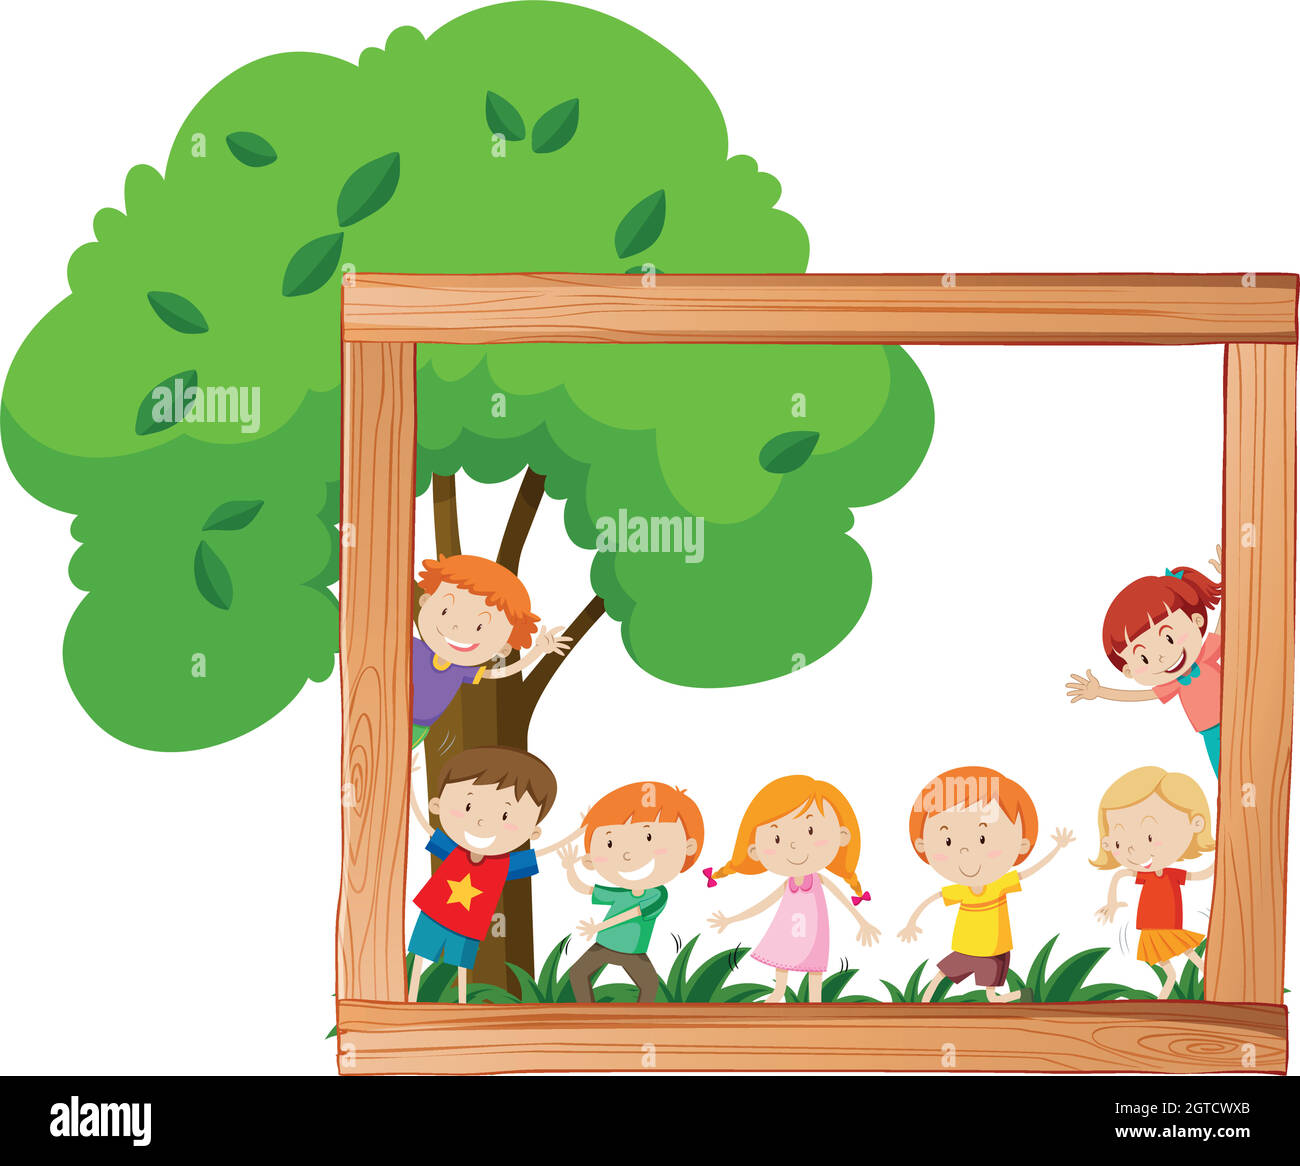 Kids in wooden frame scene Stock Vector